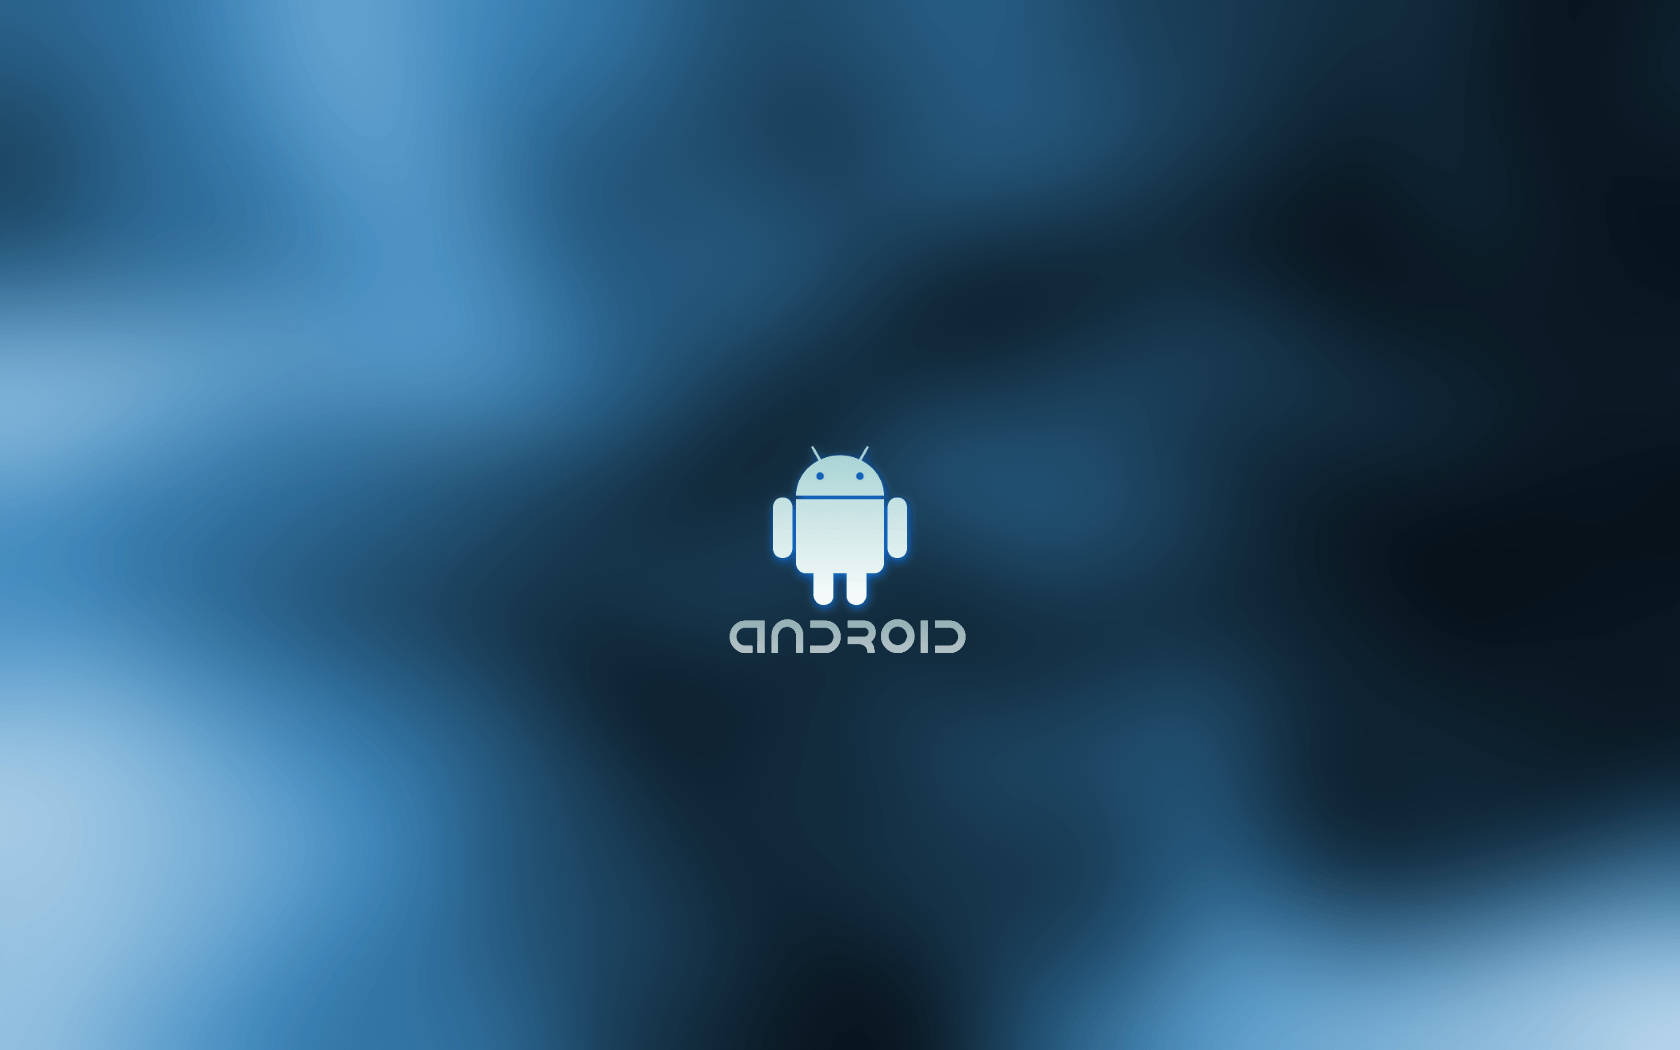 Minimal White Android Logo Wallpaper